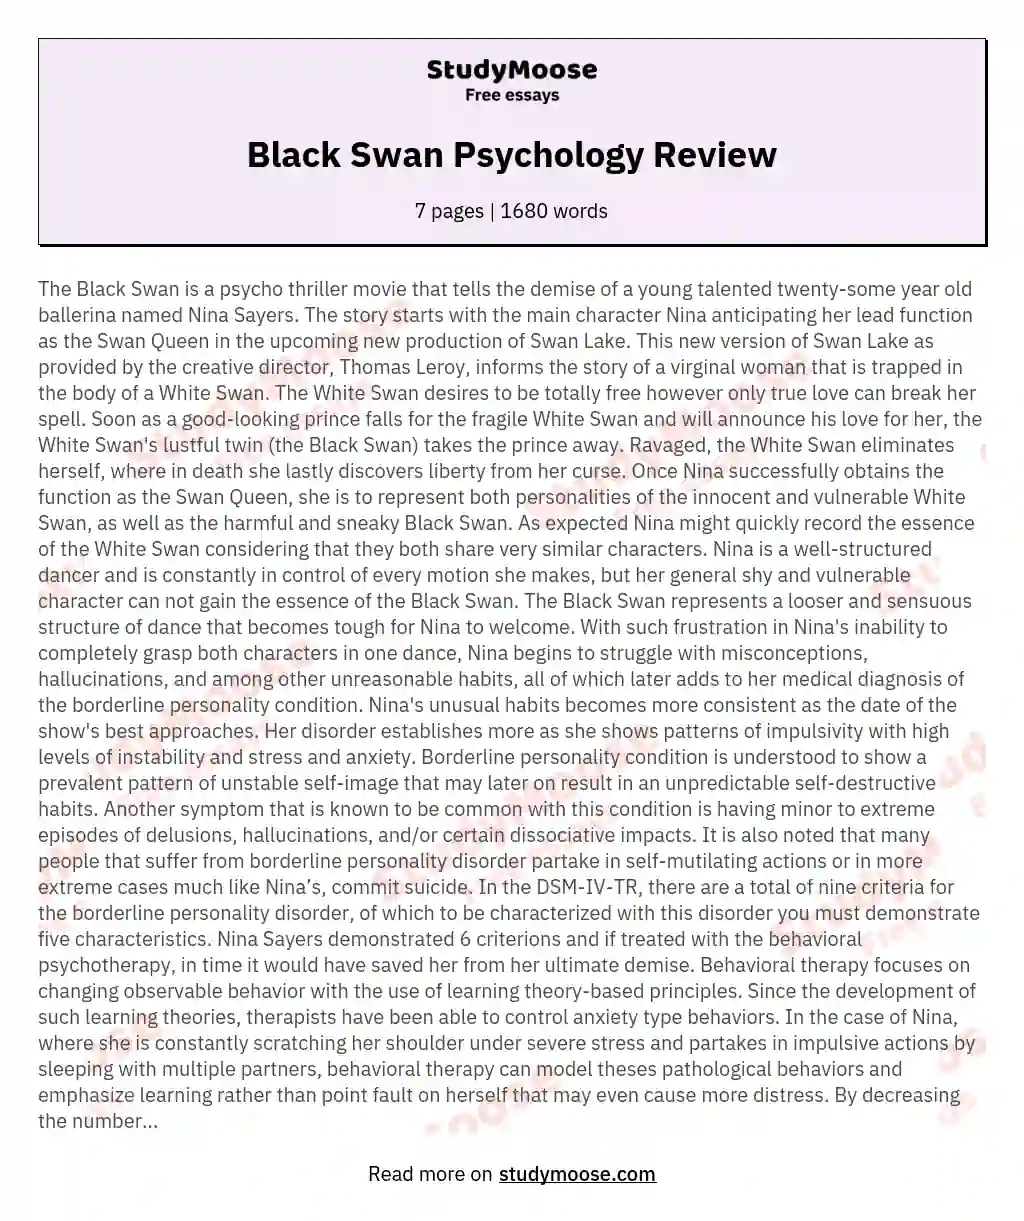 Black Swan Psychology Review